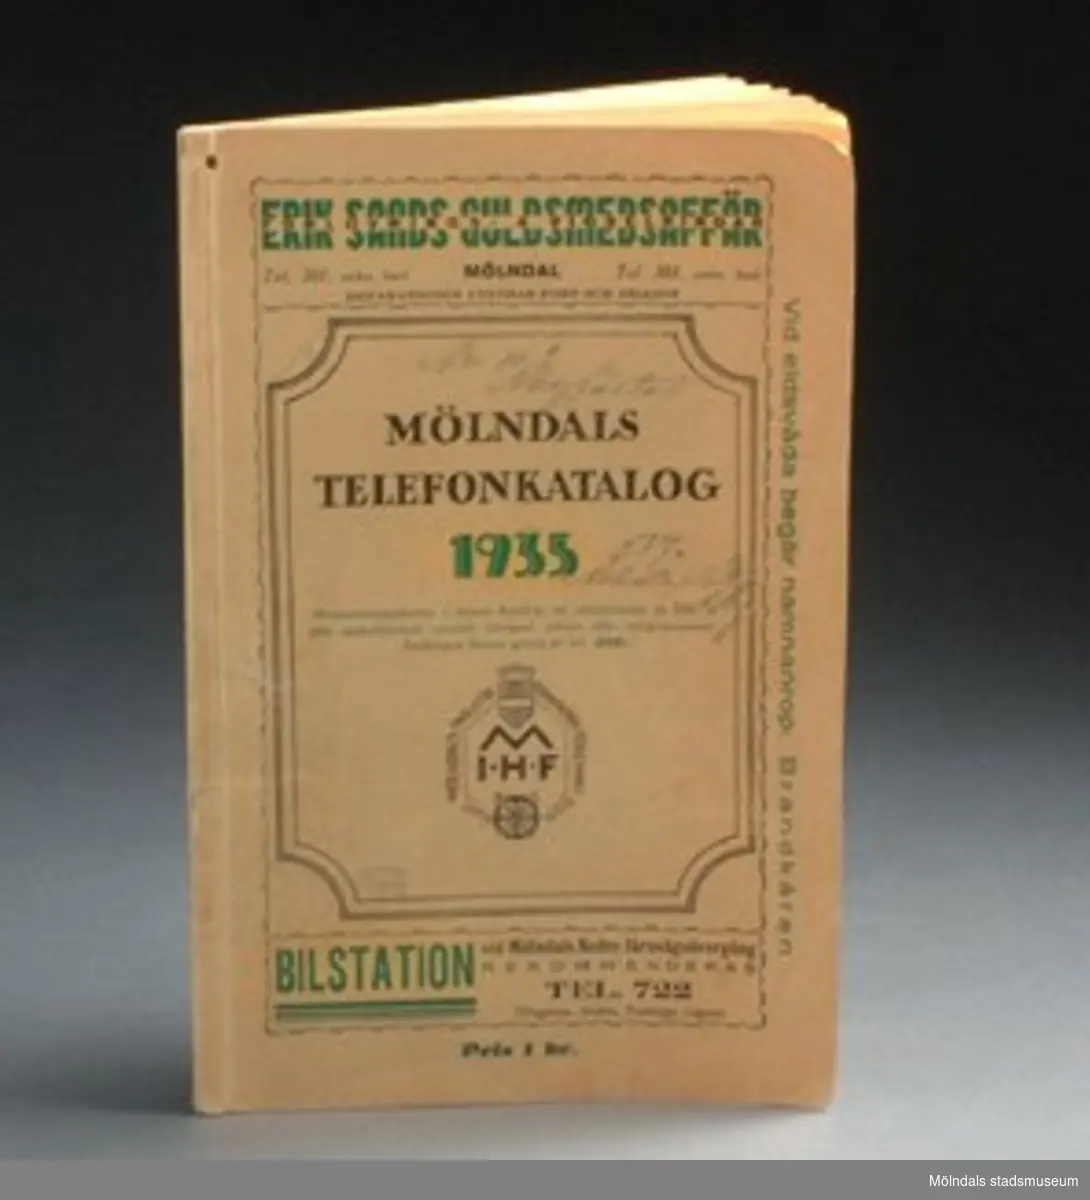 Mölndals telefonkatalog 1935, Mölndal, 1935. 72 sidor.